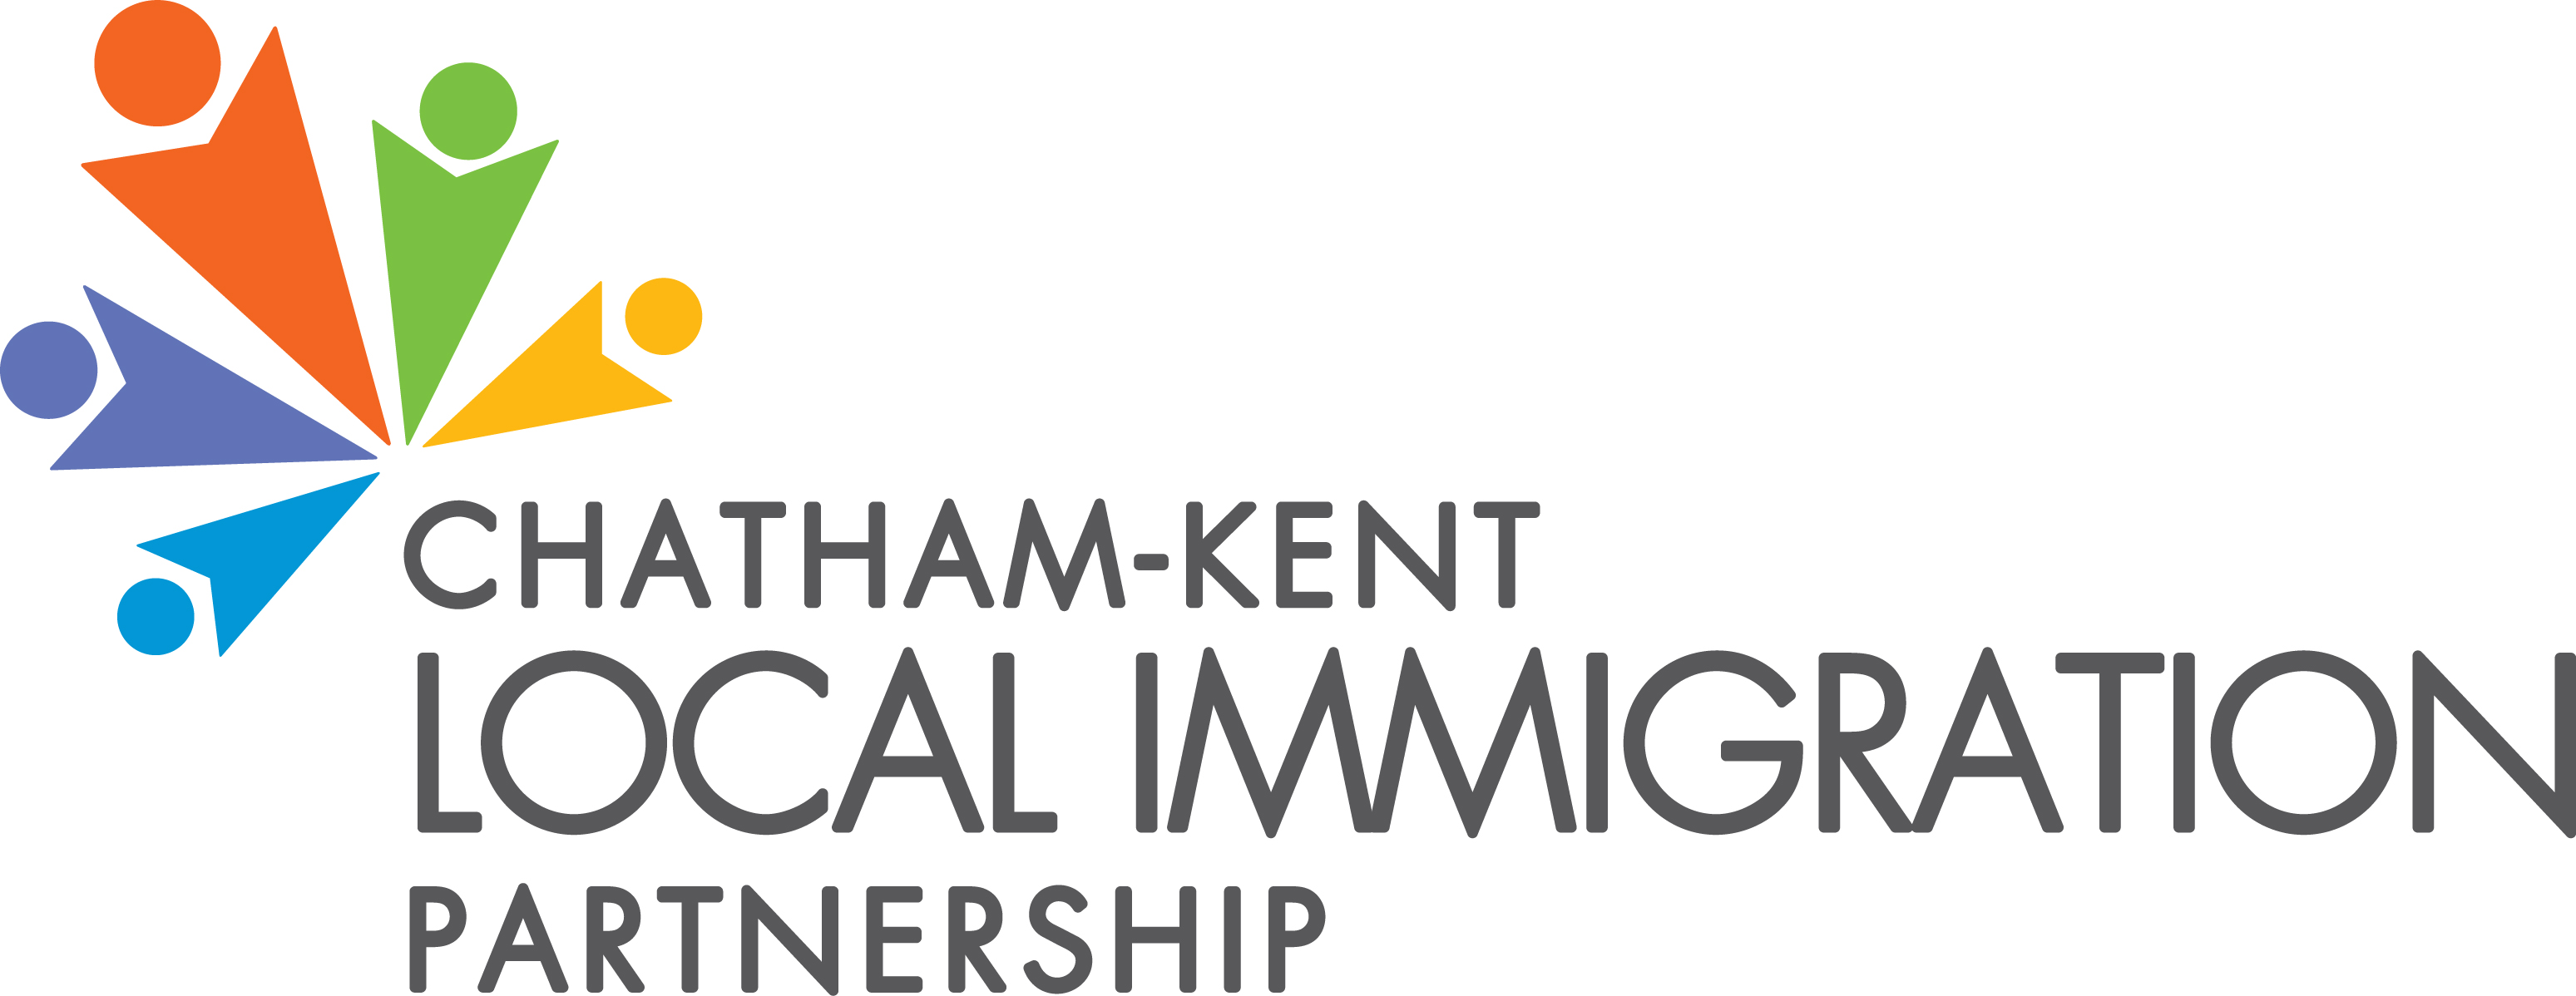 Chatham-Kent Local Immigration Partnership Logo